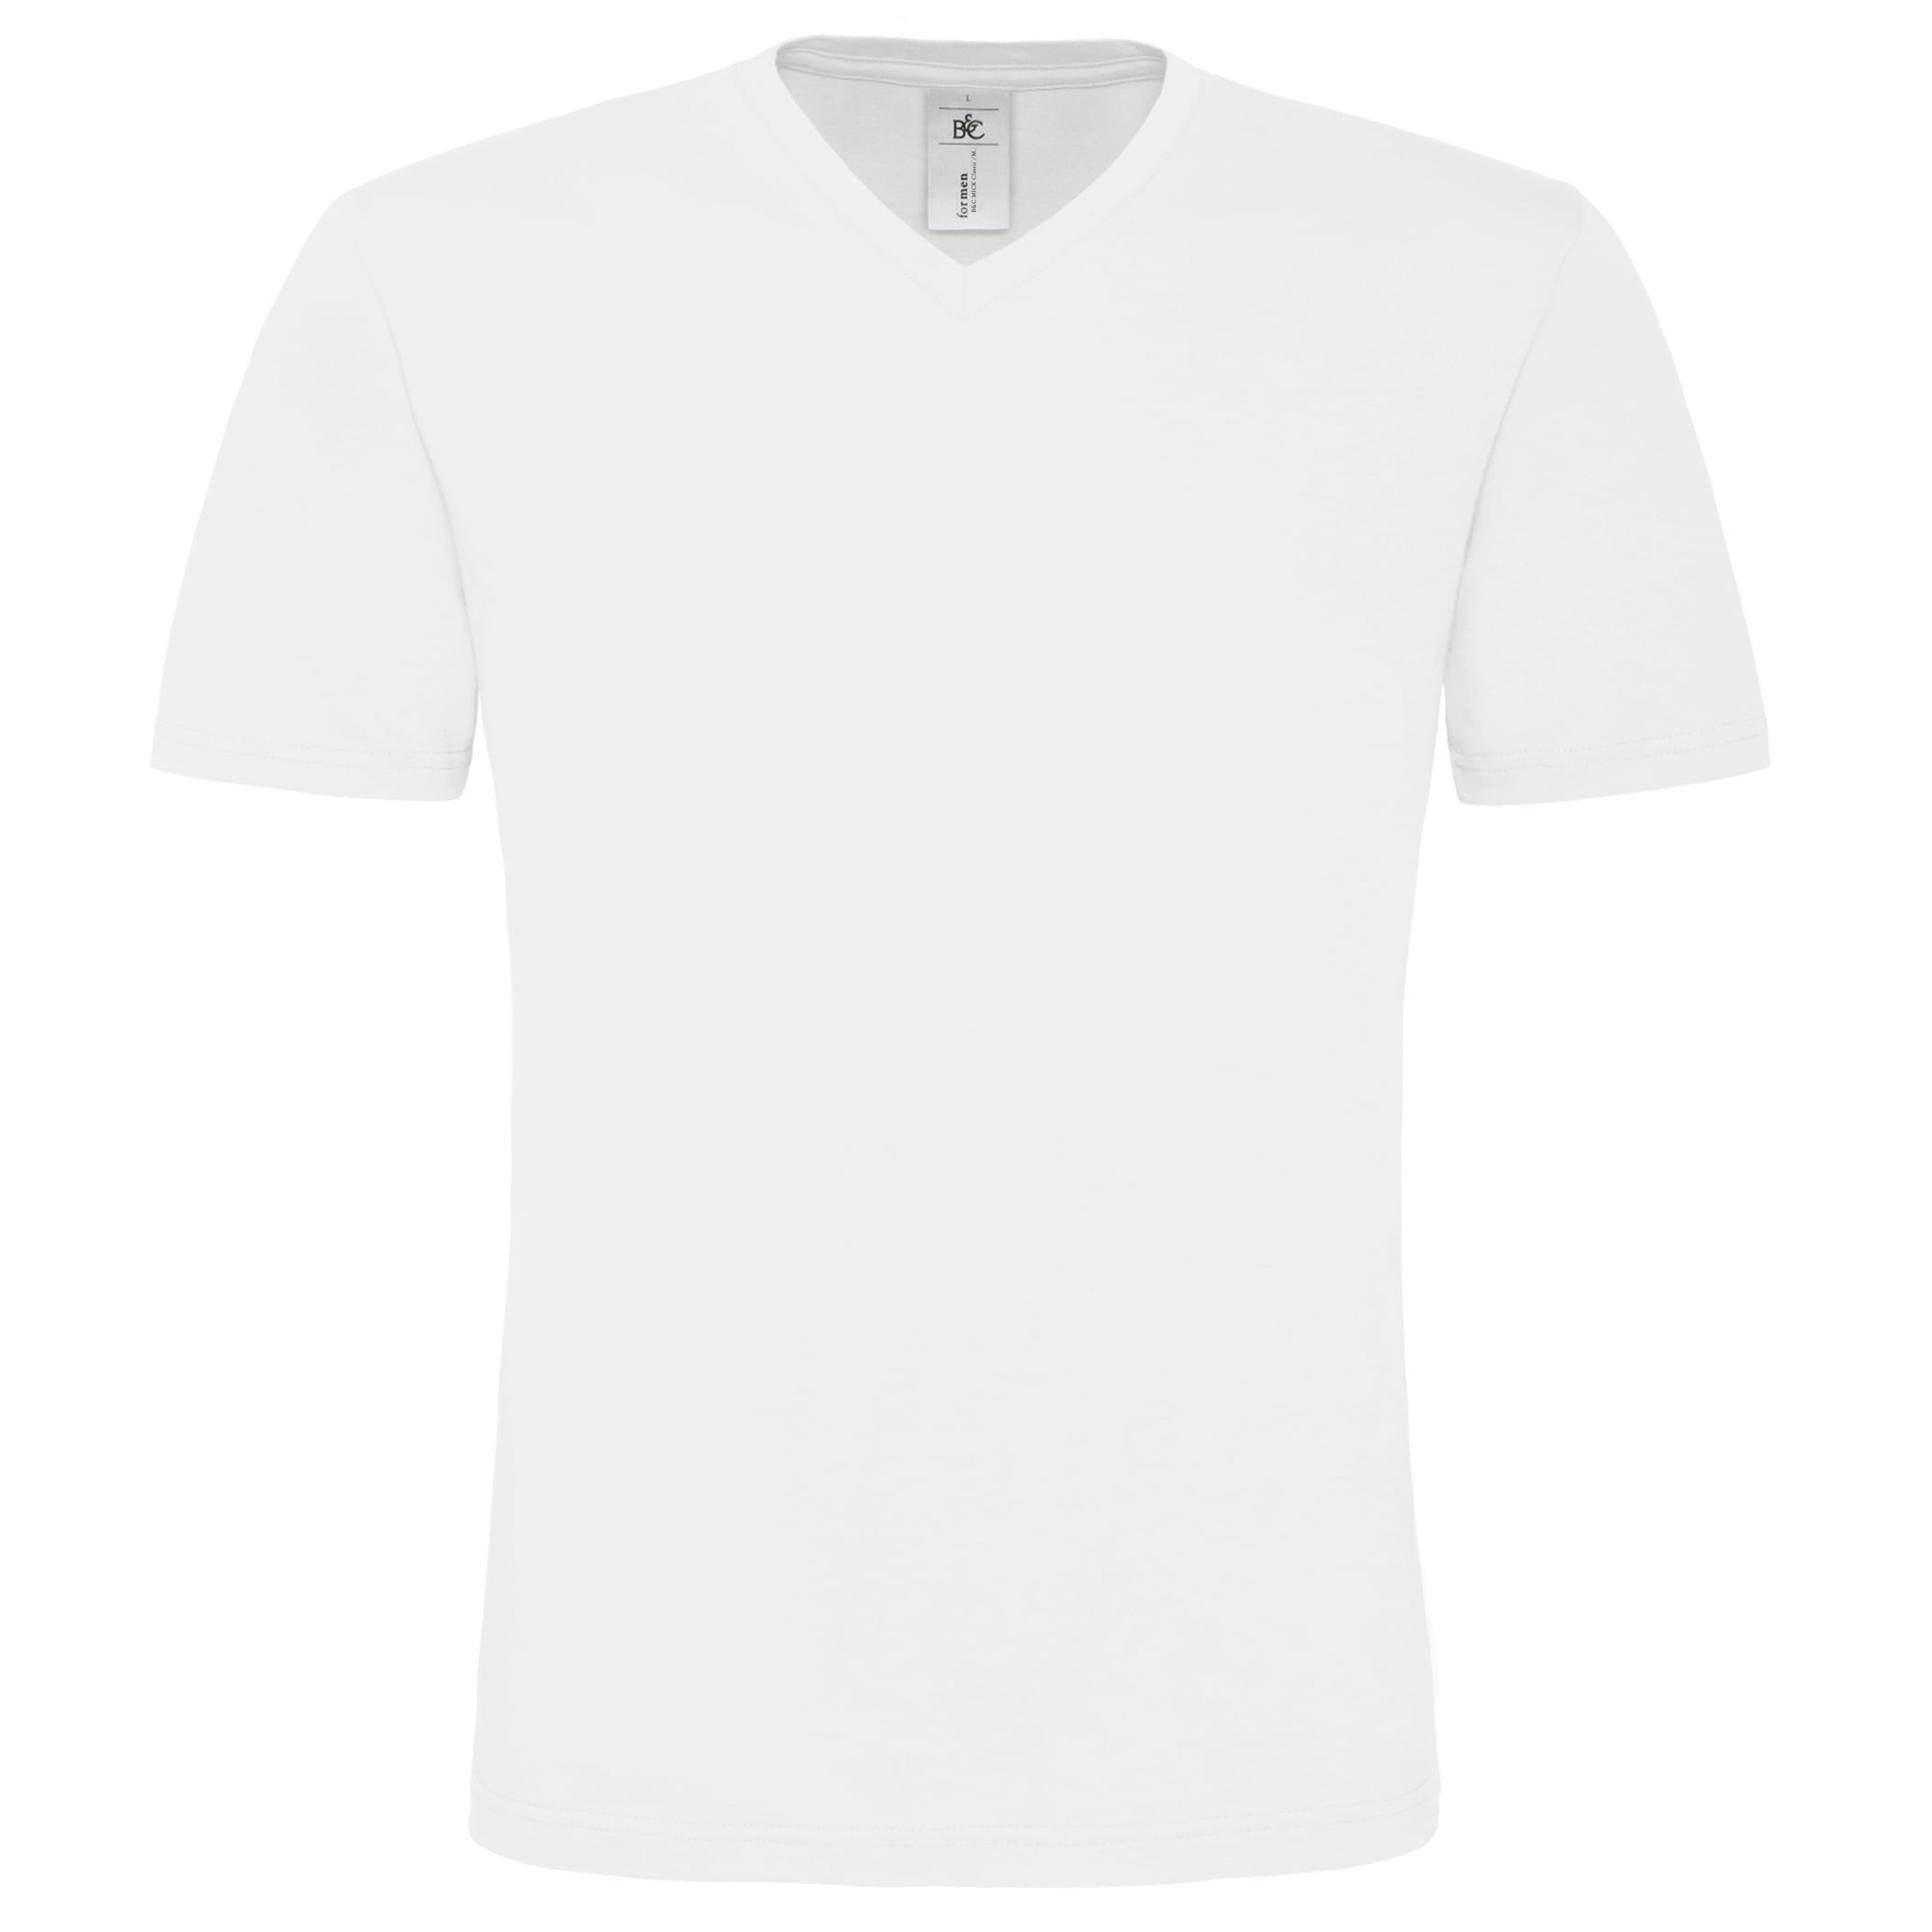 B&C Mens Mick Classic V Neck Short Sleeve Plain Blank T-Shirt/Tee/Top BC2008 